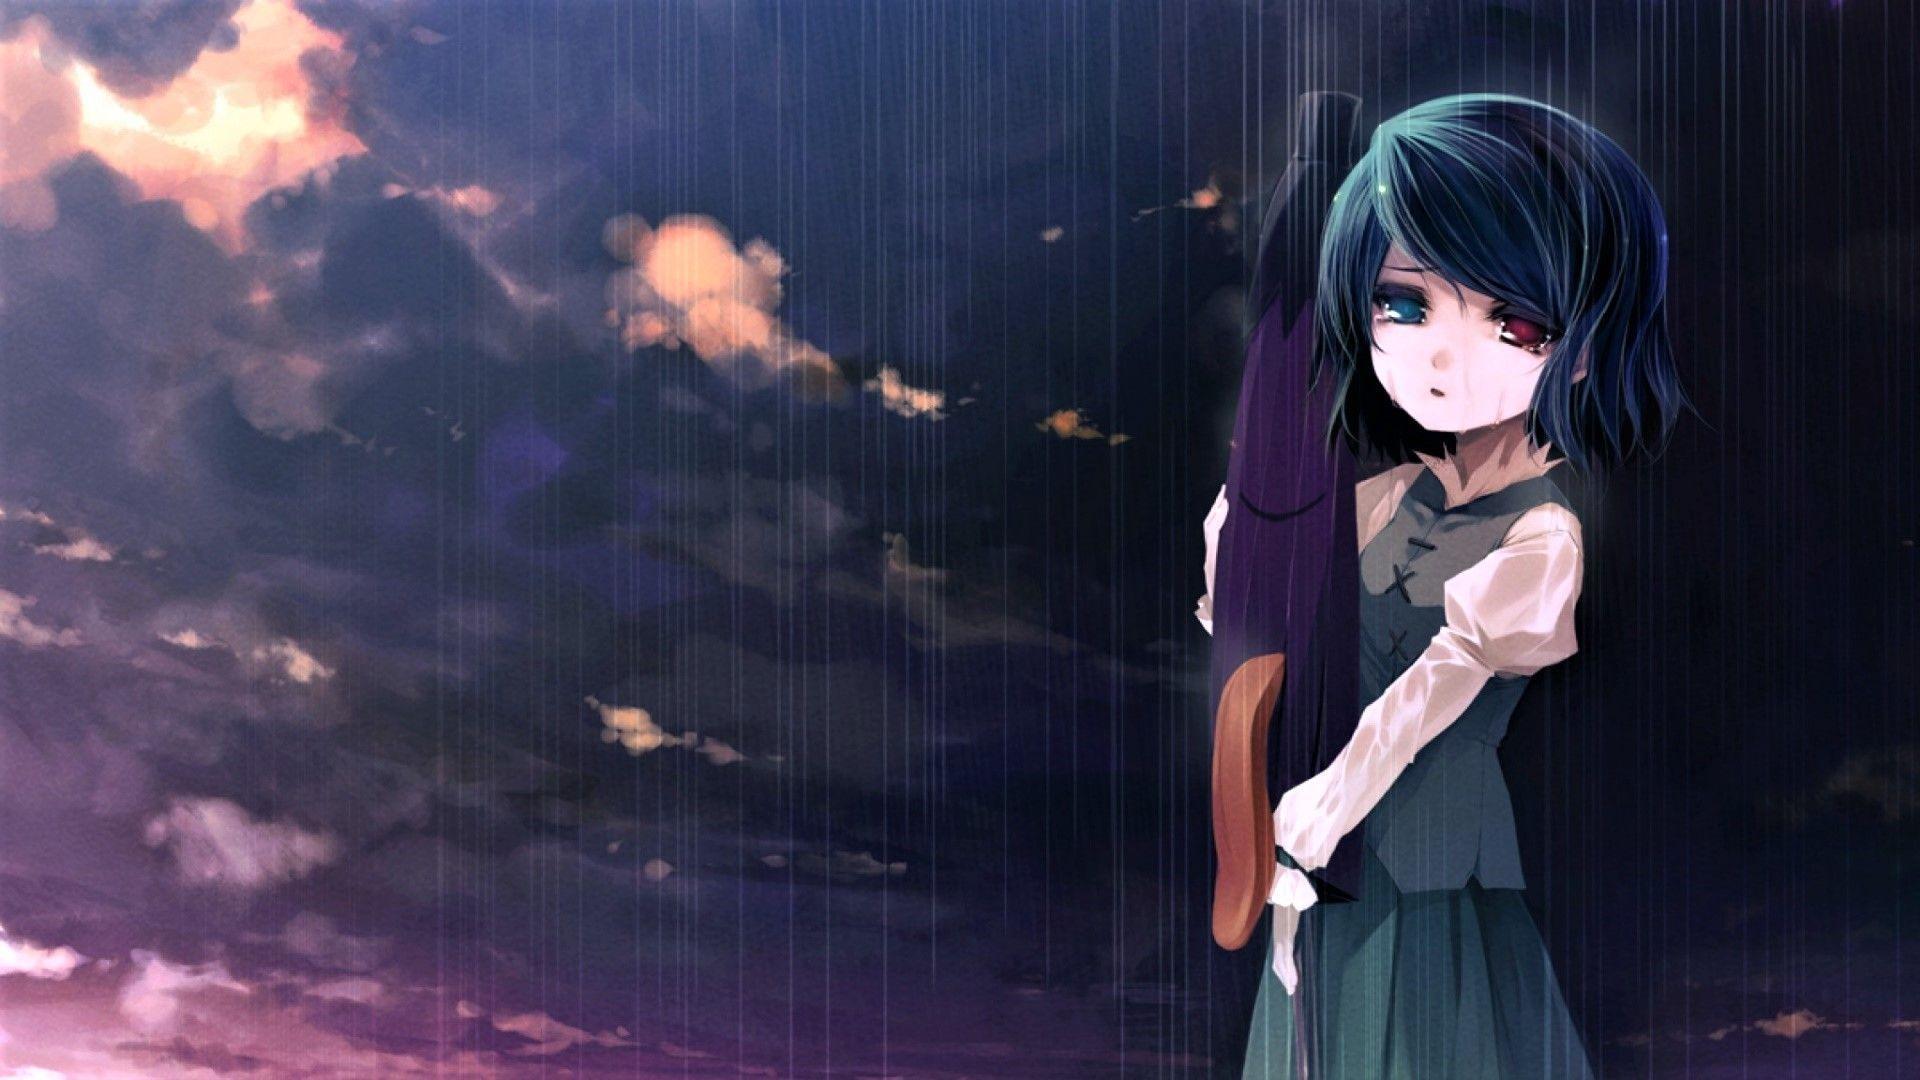 Sad Anime PC Wallpapers - Top Free Sad Anime PC Backgrounds ...